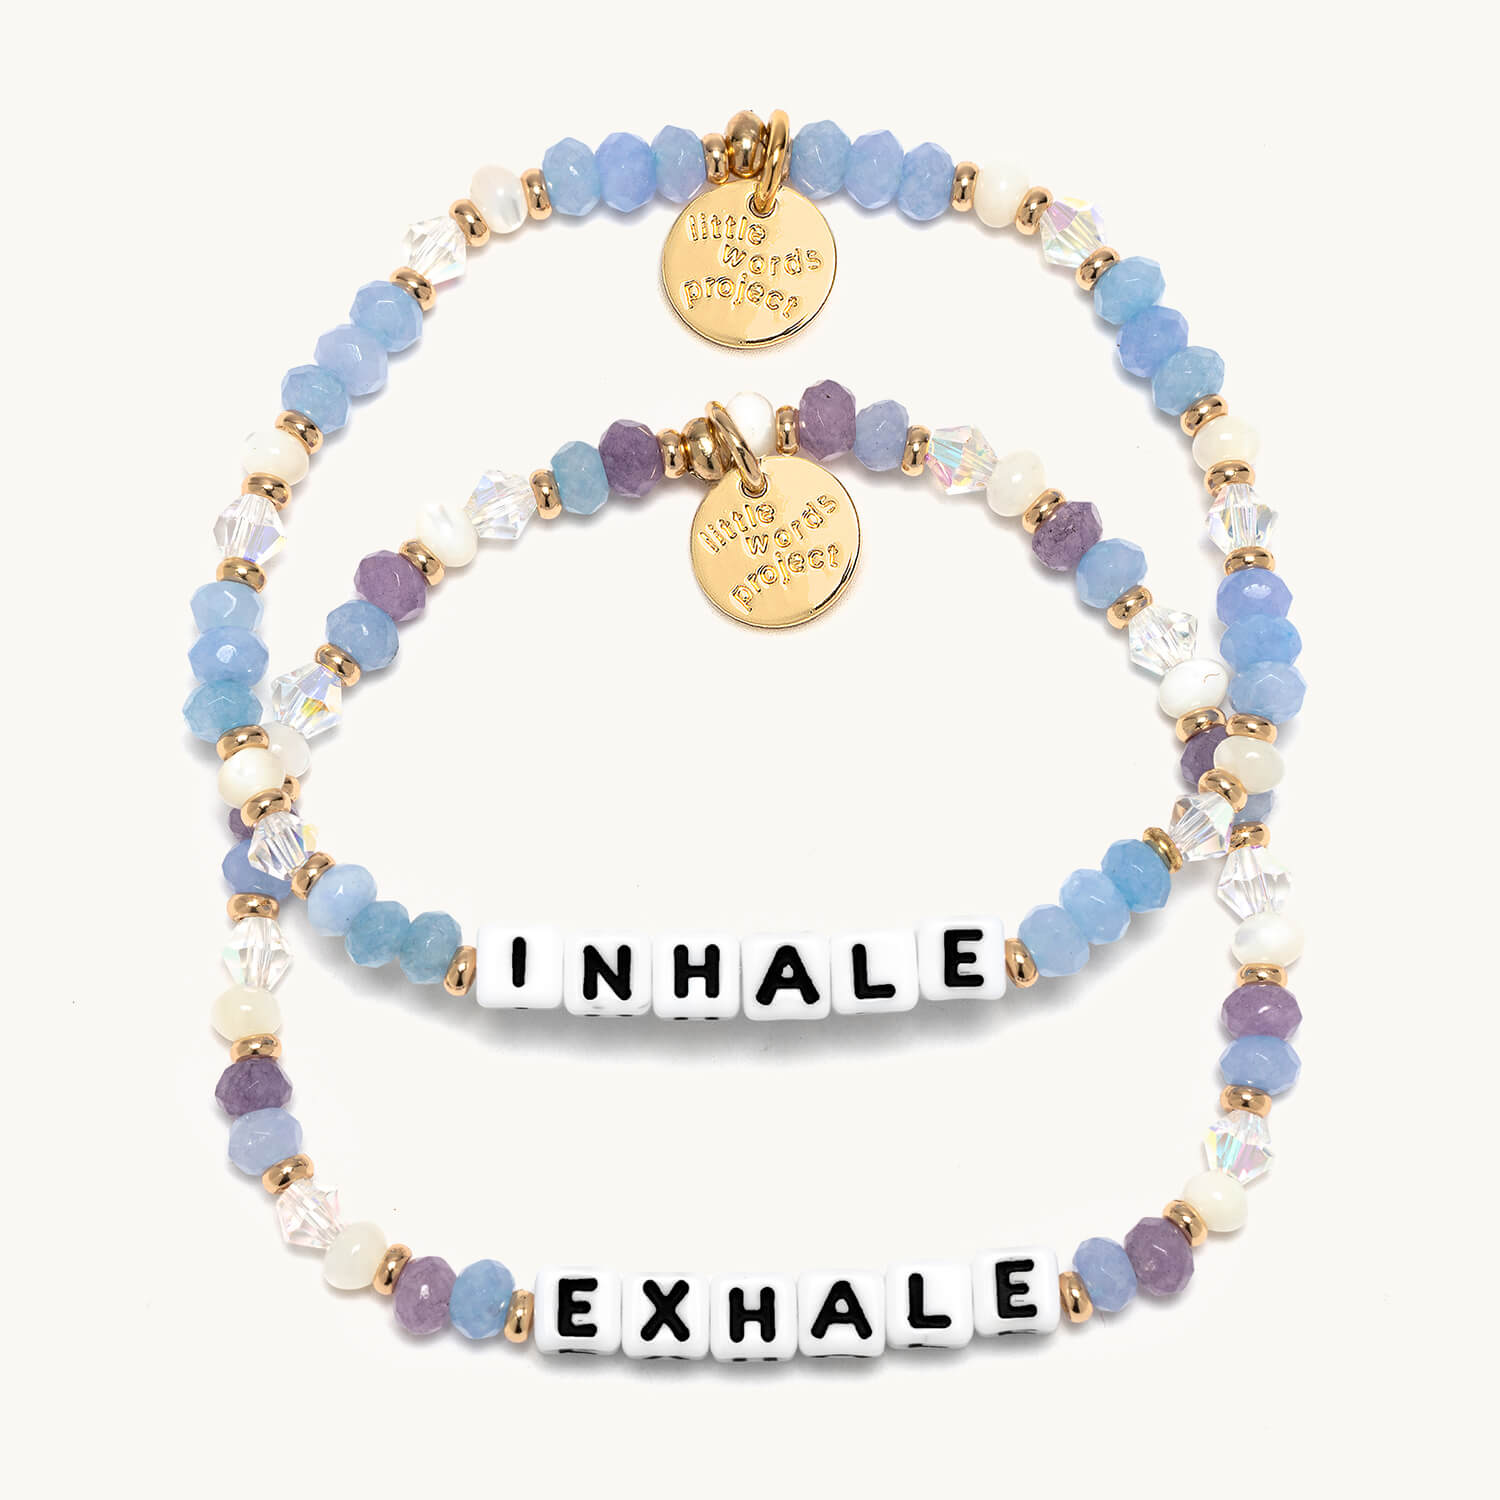 Inhale/Exhale- Little Words Project Bracelets